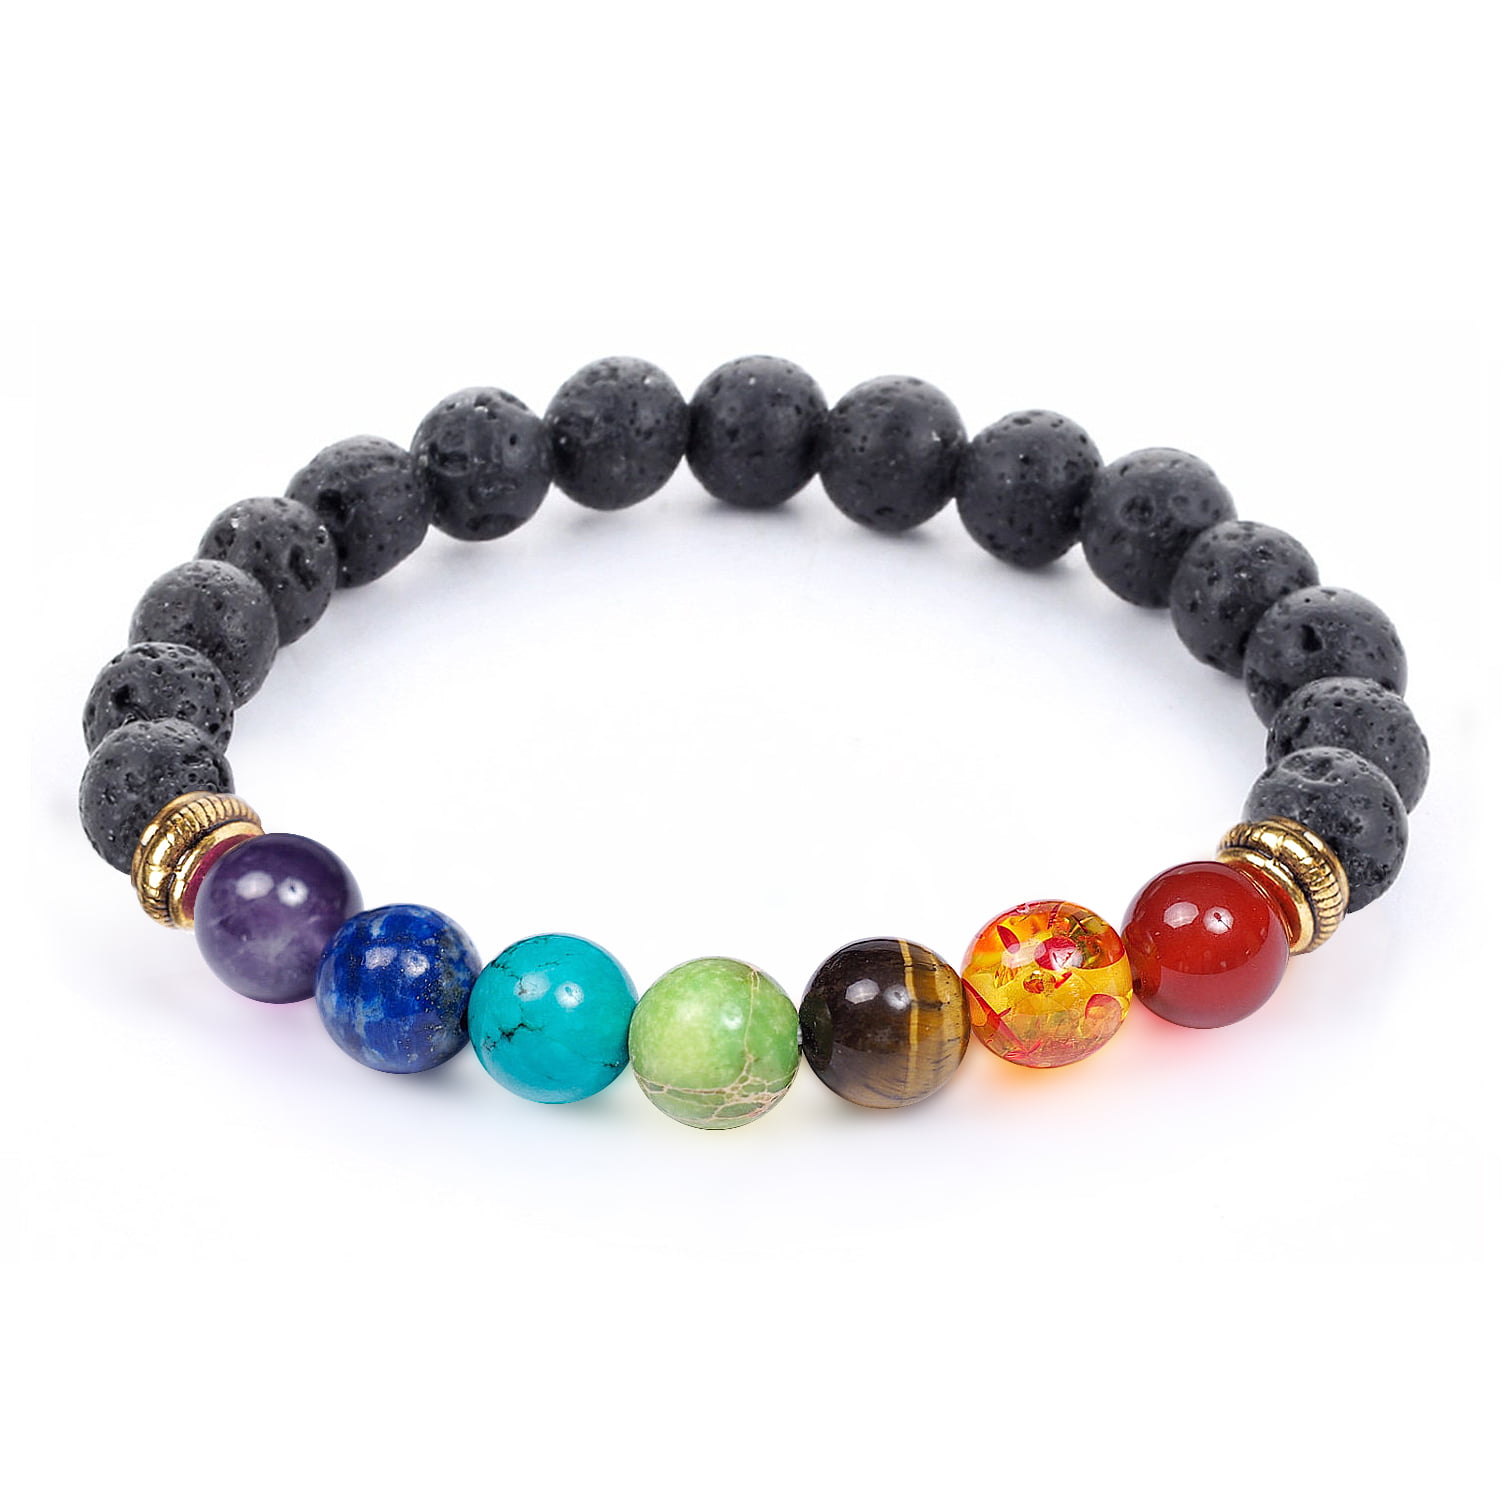 Jewelry Yoga 7 Chakra Healing Diffuser Reiki Bracelet With Real Stones Lava Beads Walmart Com Walmart Com